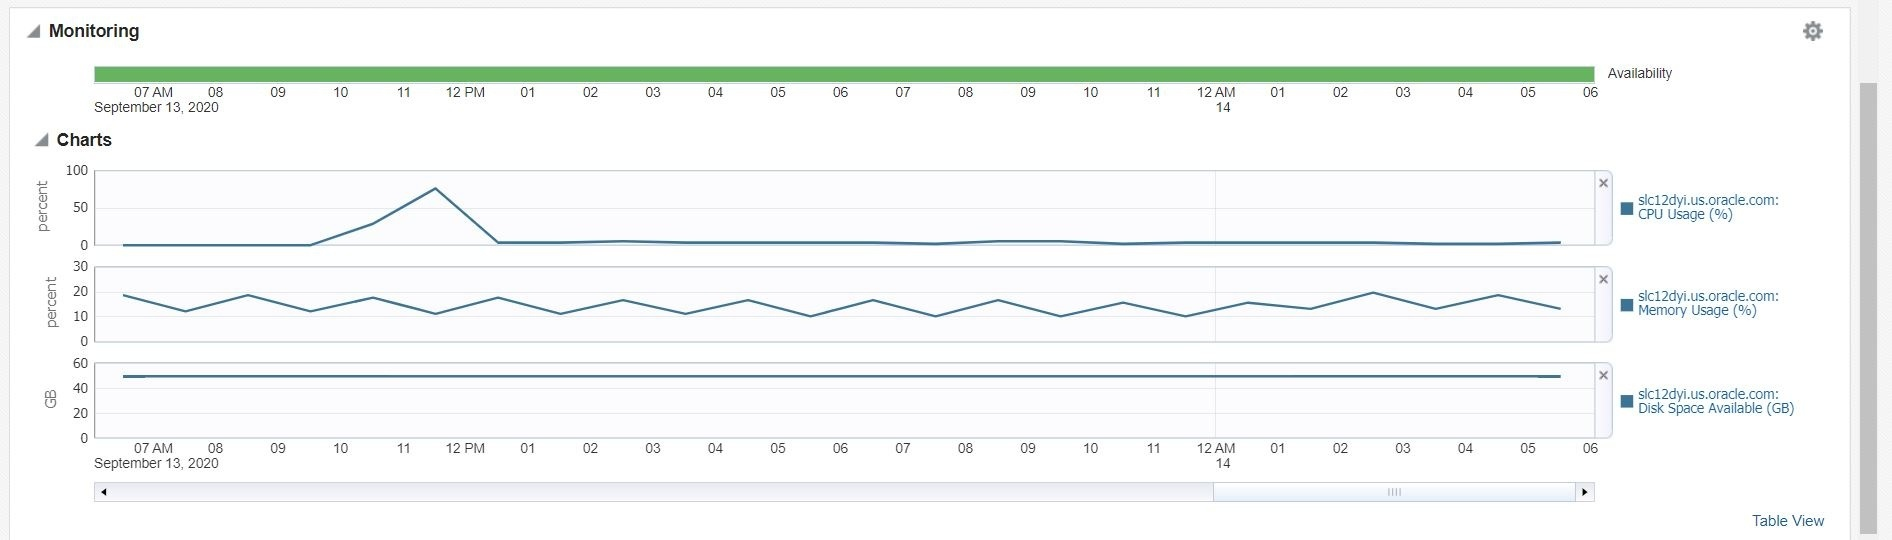 ELK Server target Monitoring and Charts